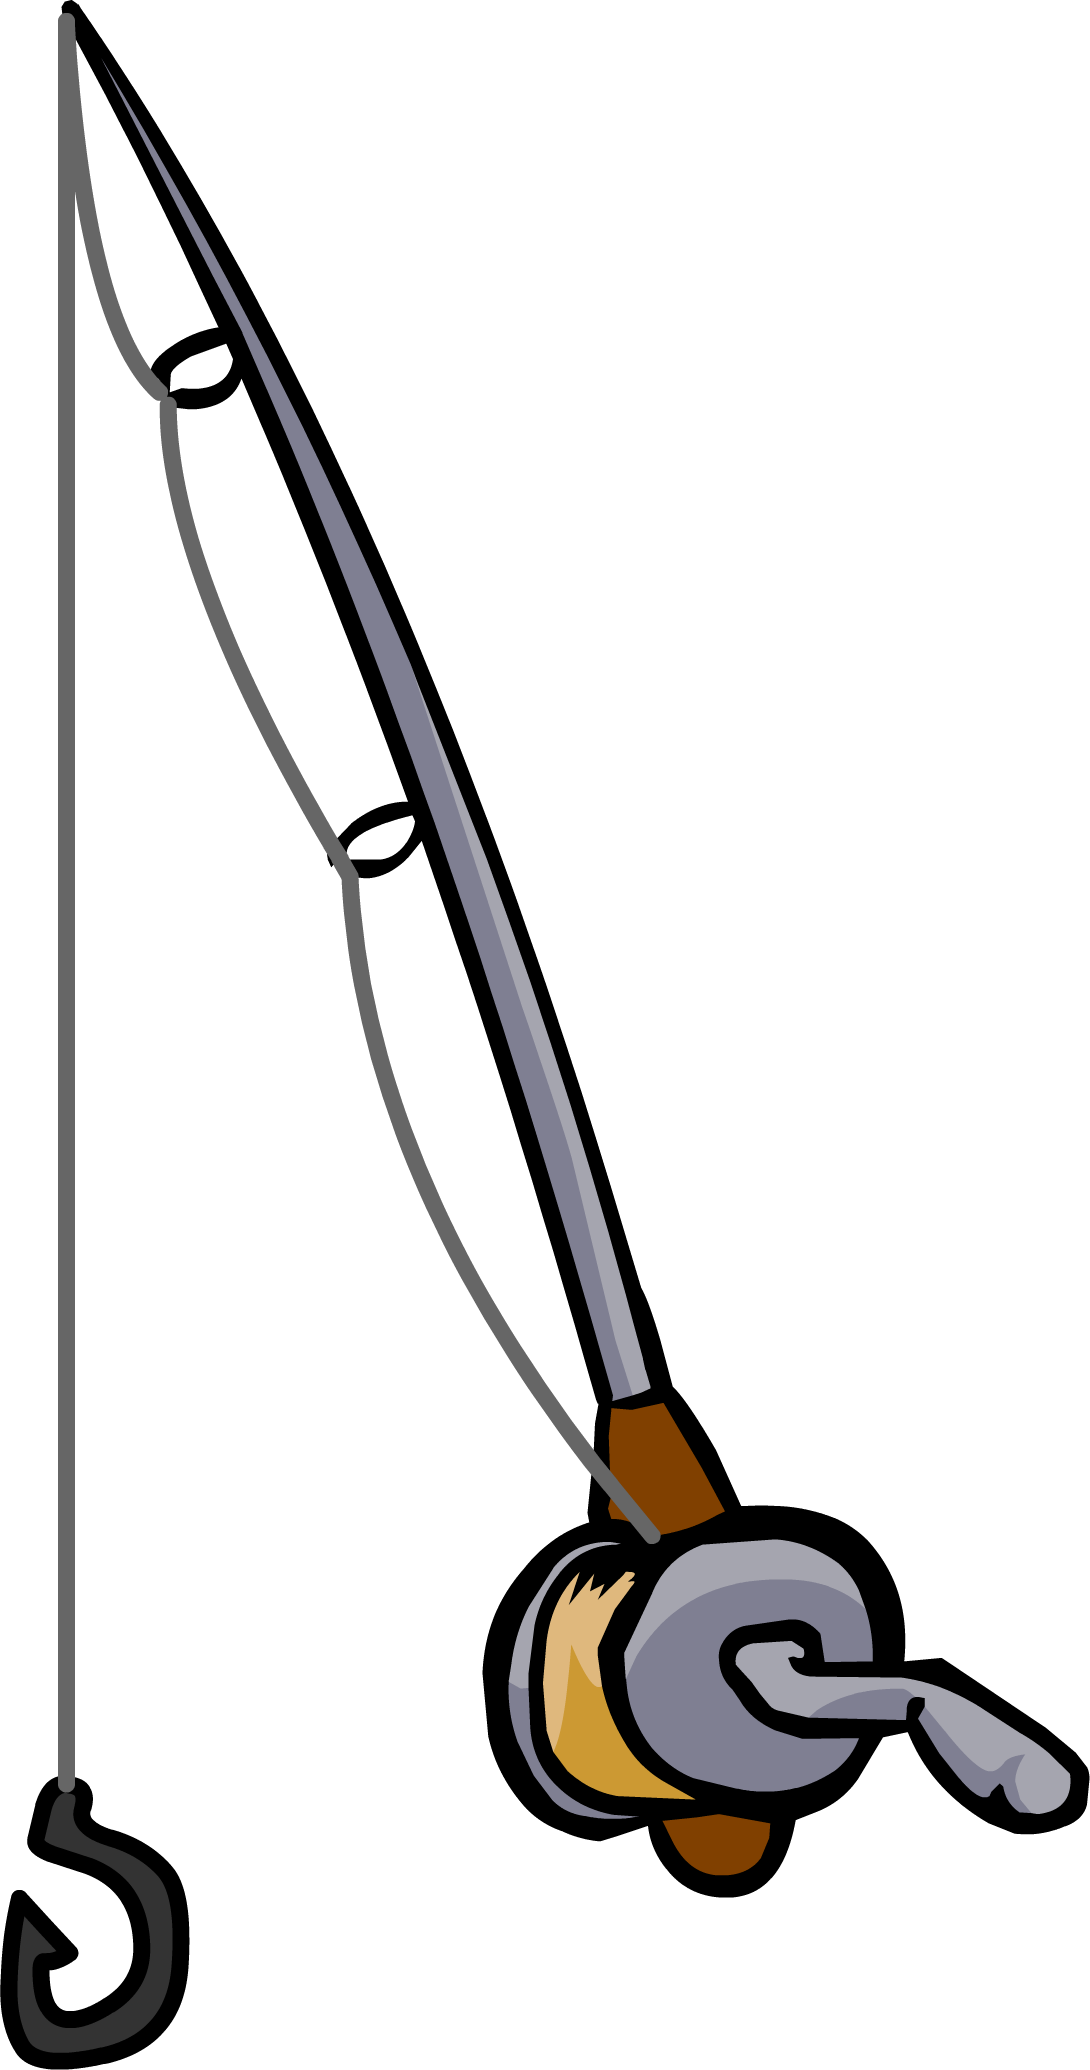 Fishing Rod | Club Penguin Wiki | FANDOM powered by Wikia